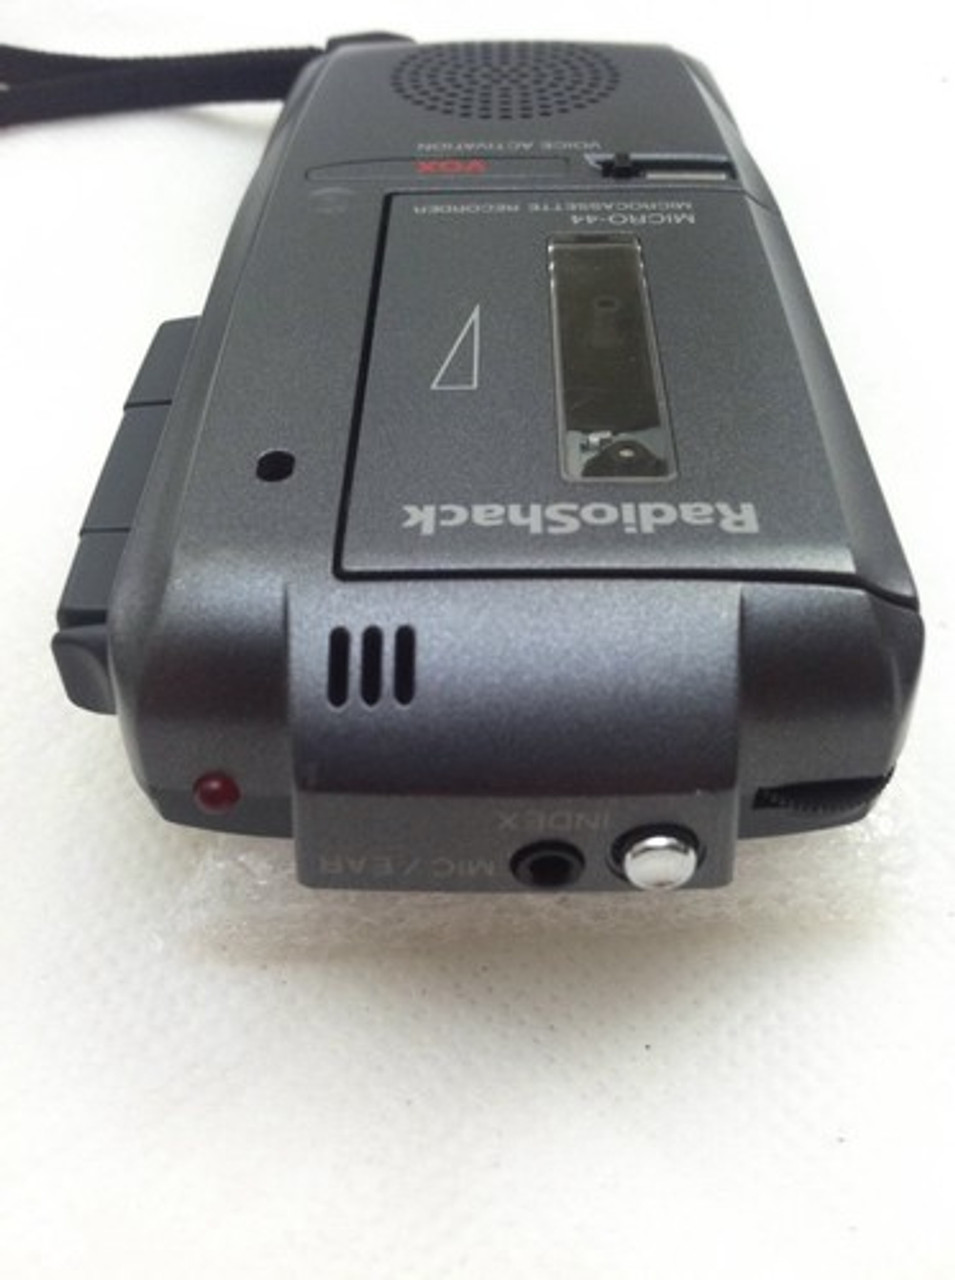 RadioShack Micro 44 Microcassette Recorder inputs